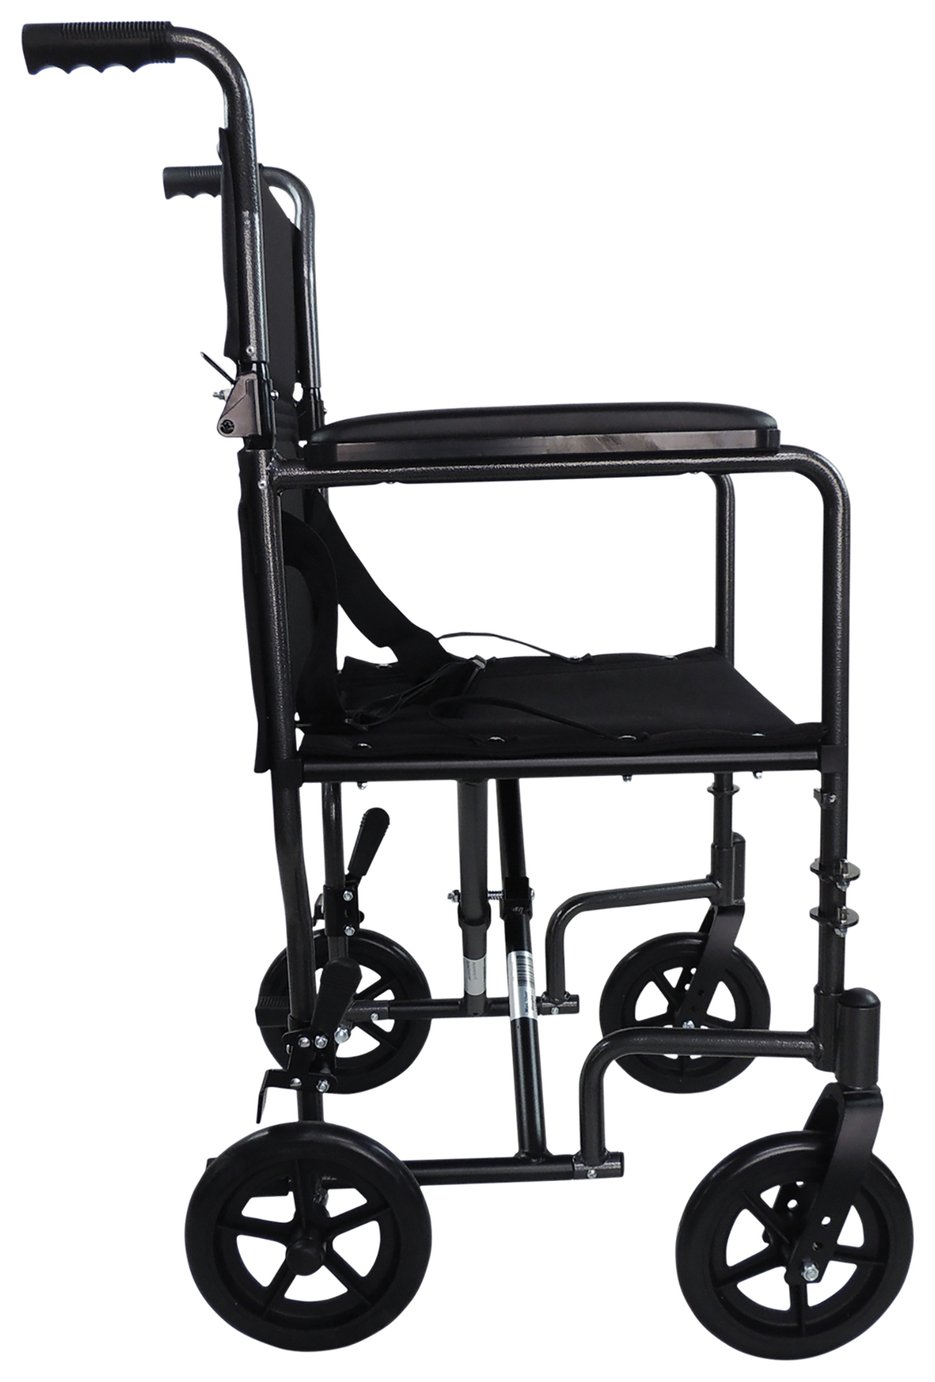 Aidapt Compact and Lightweight Aluminium Travel Wheelchair Review